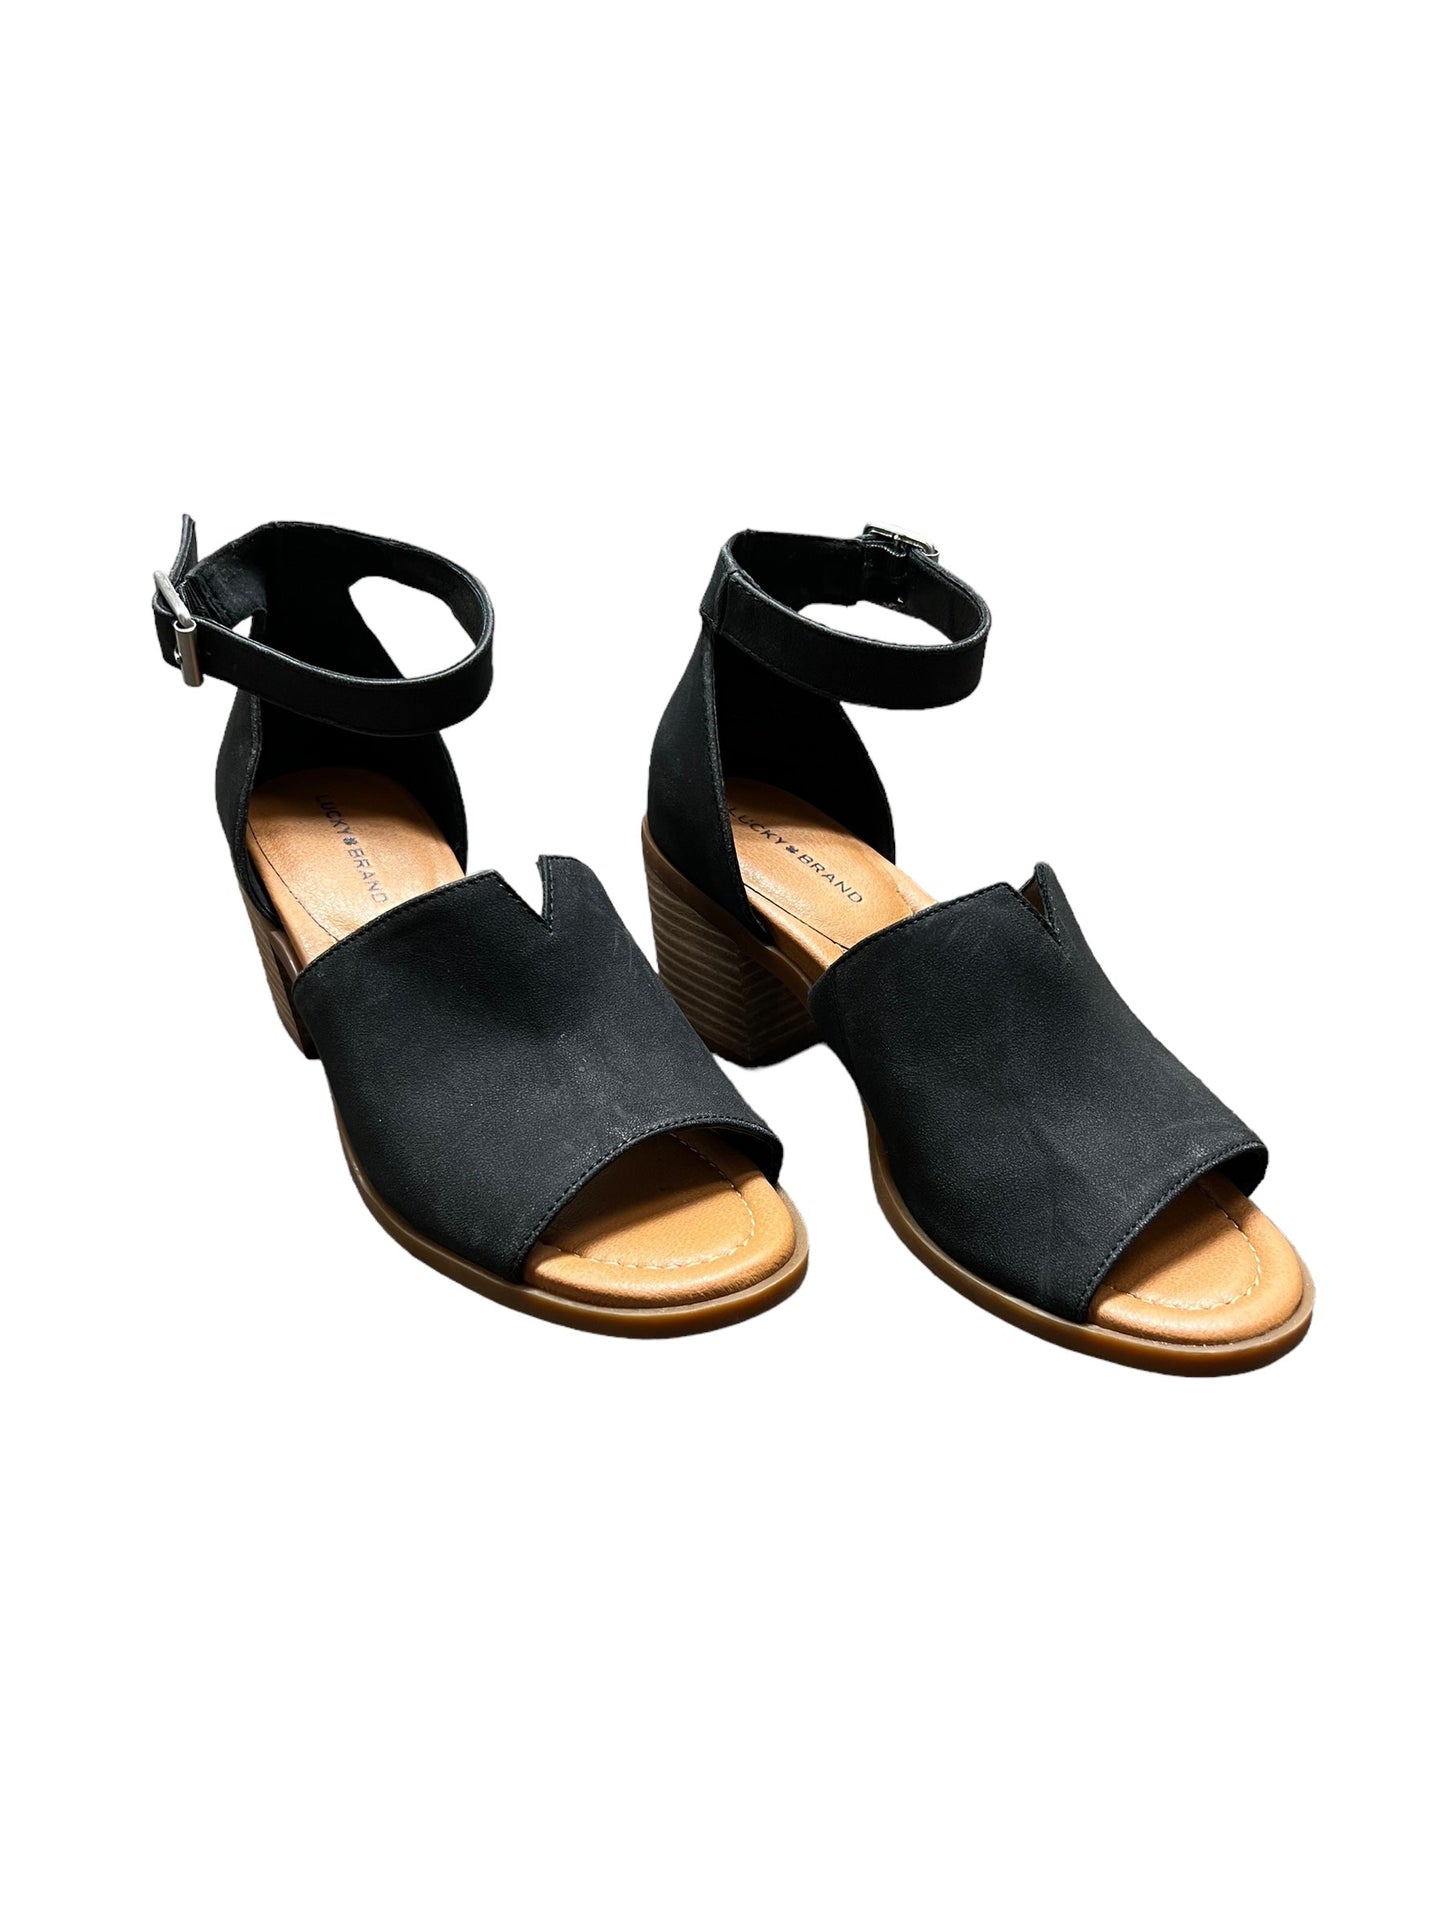 Black Sandals Heels Block Lucky Brand, Size 6.5